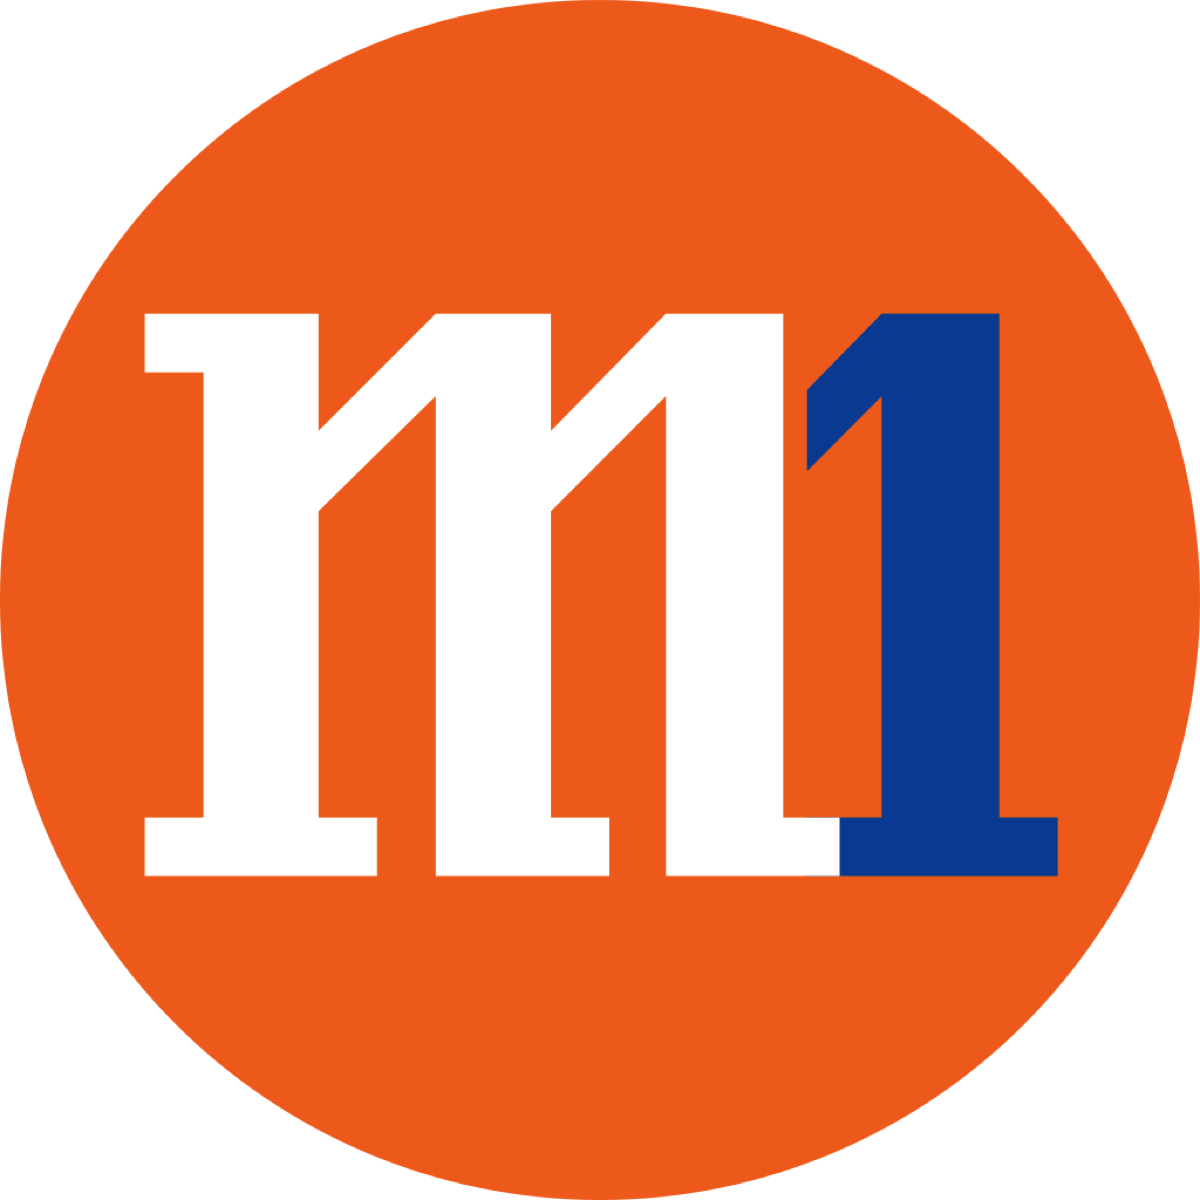 M1 (M1 SP) - Maybank Kim Eng 2017-09-13: An Unenviable Position